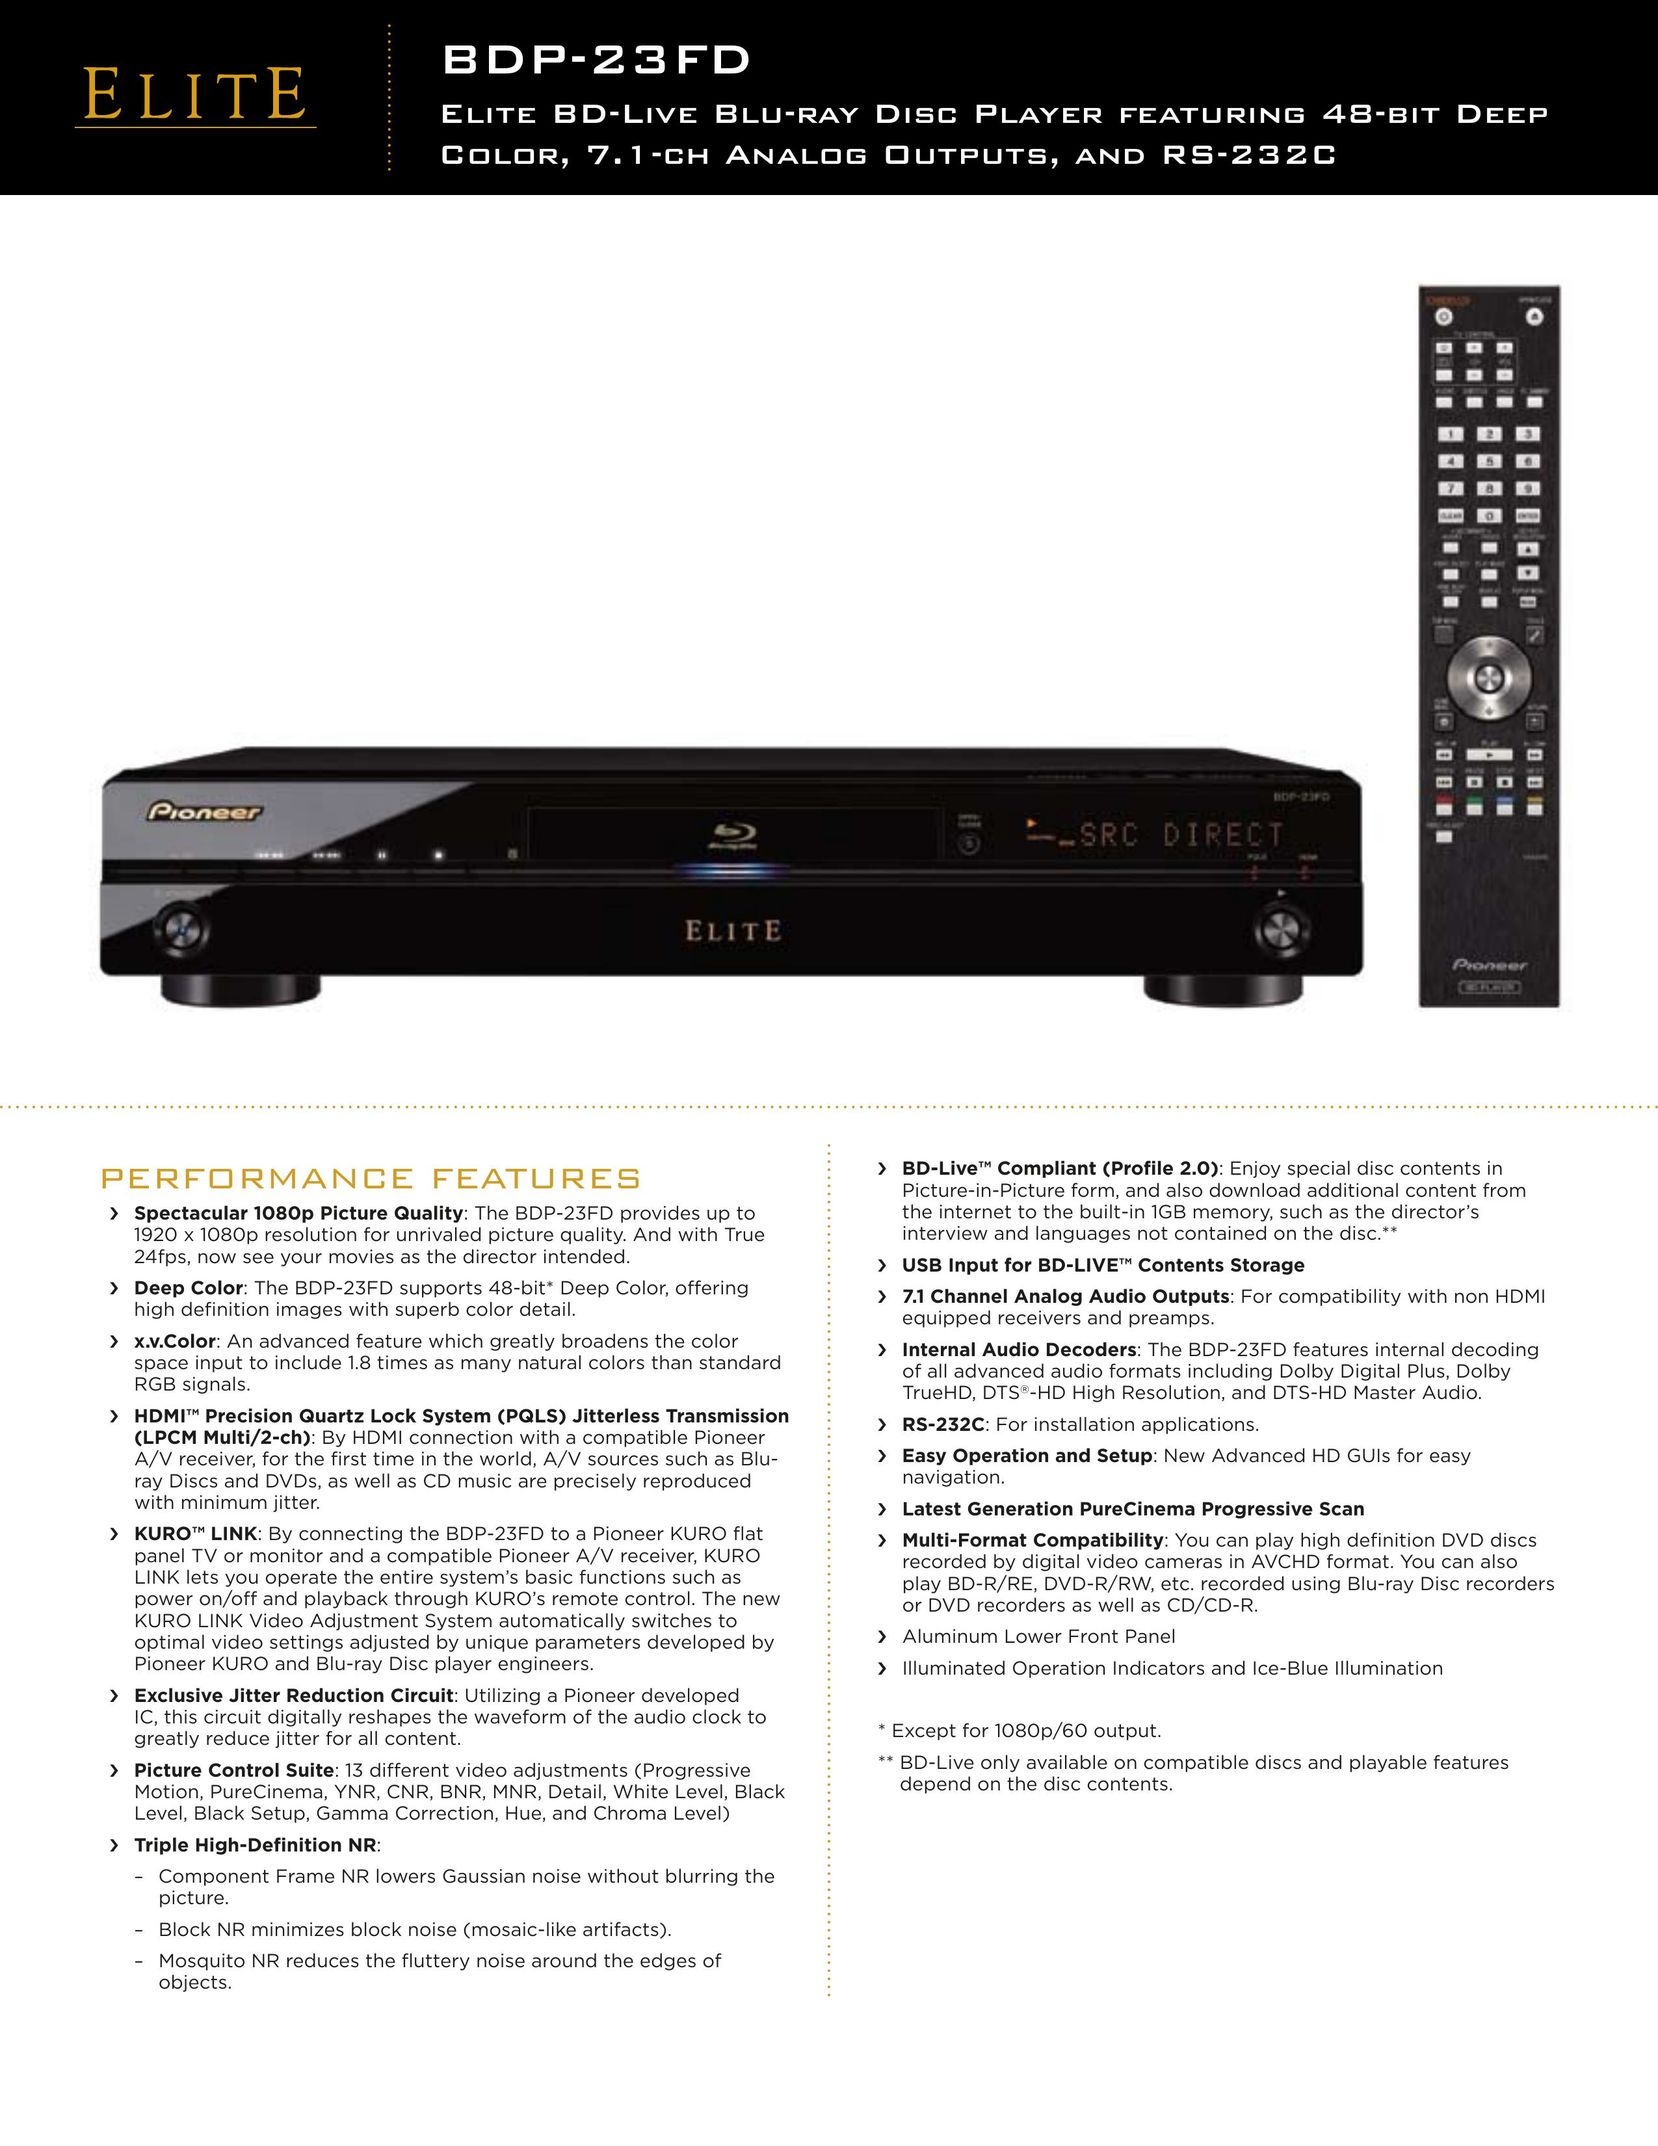 Pioneer BDP-23FD DVD Player User Manual